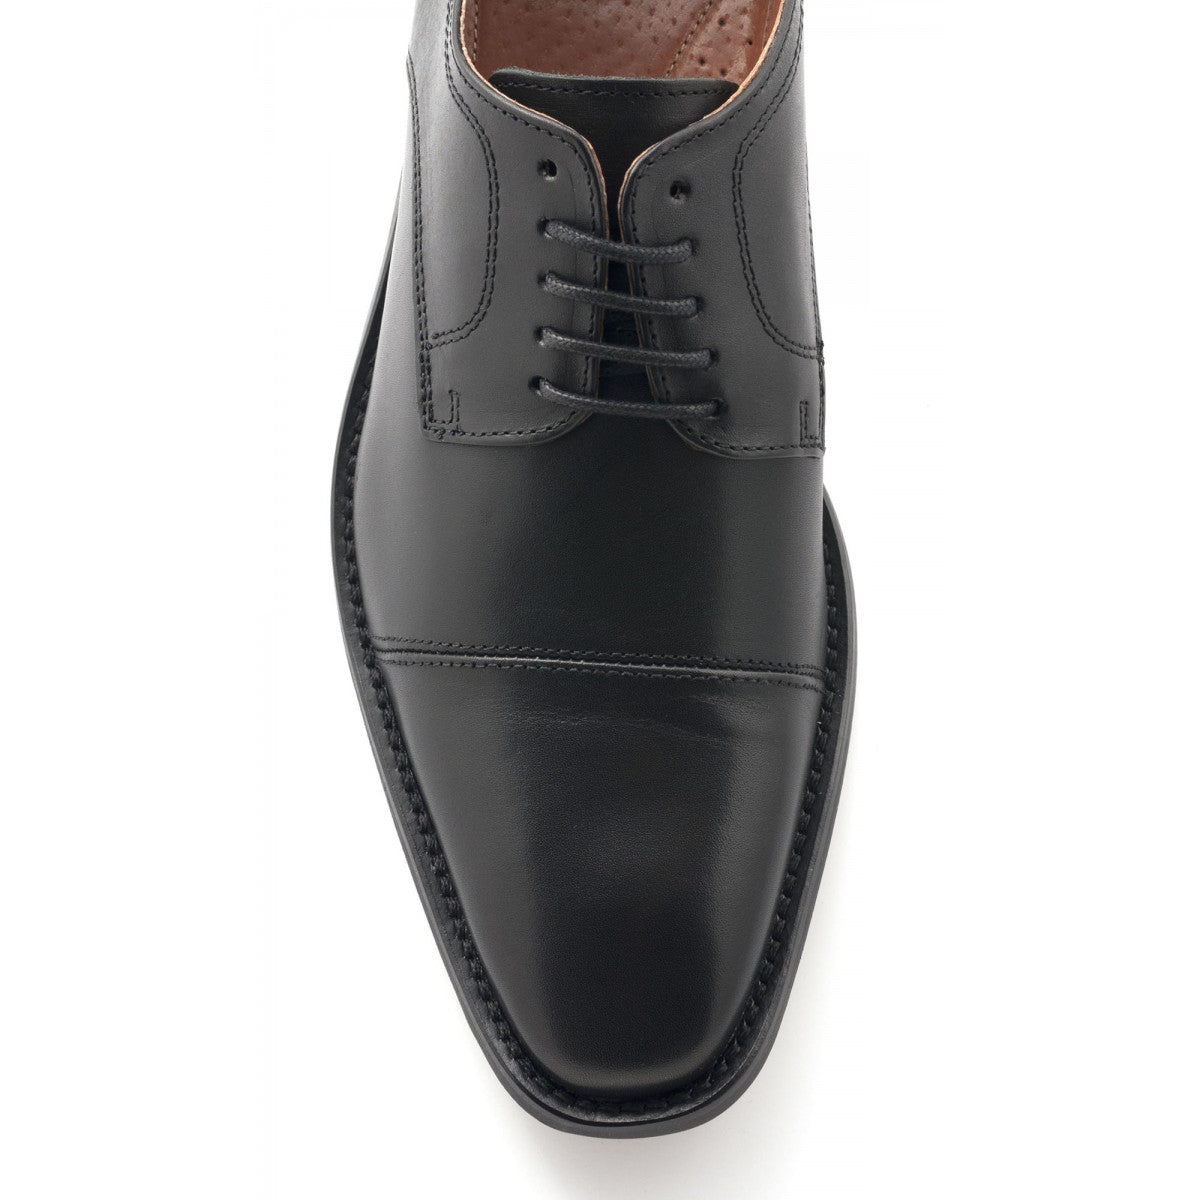 PARC City Five-Eye Cap Toe Shoe in Black Leather